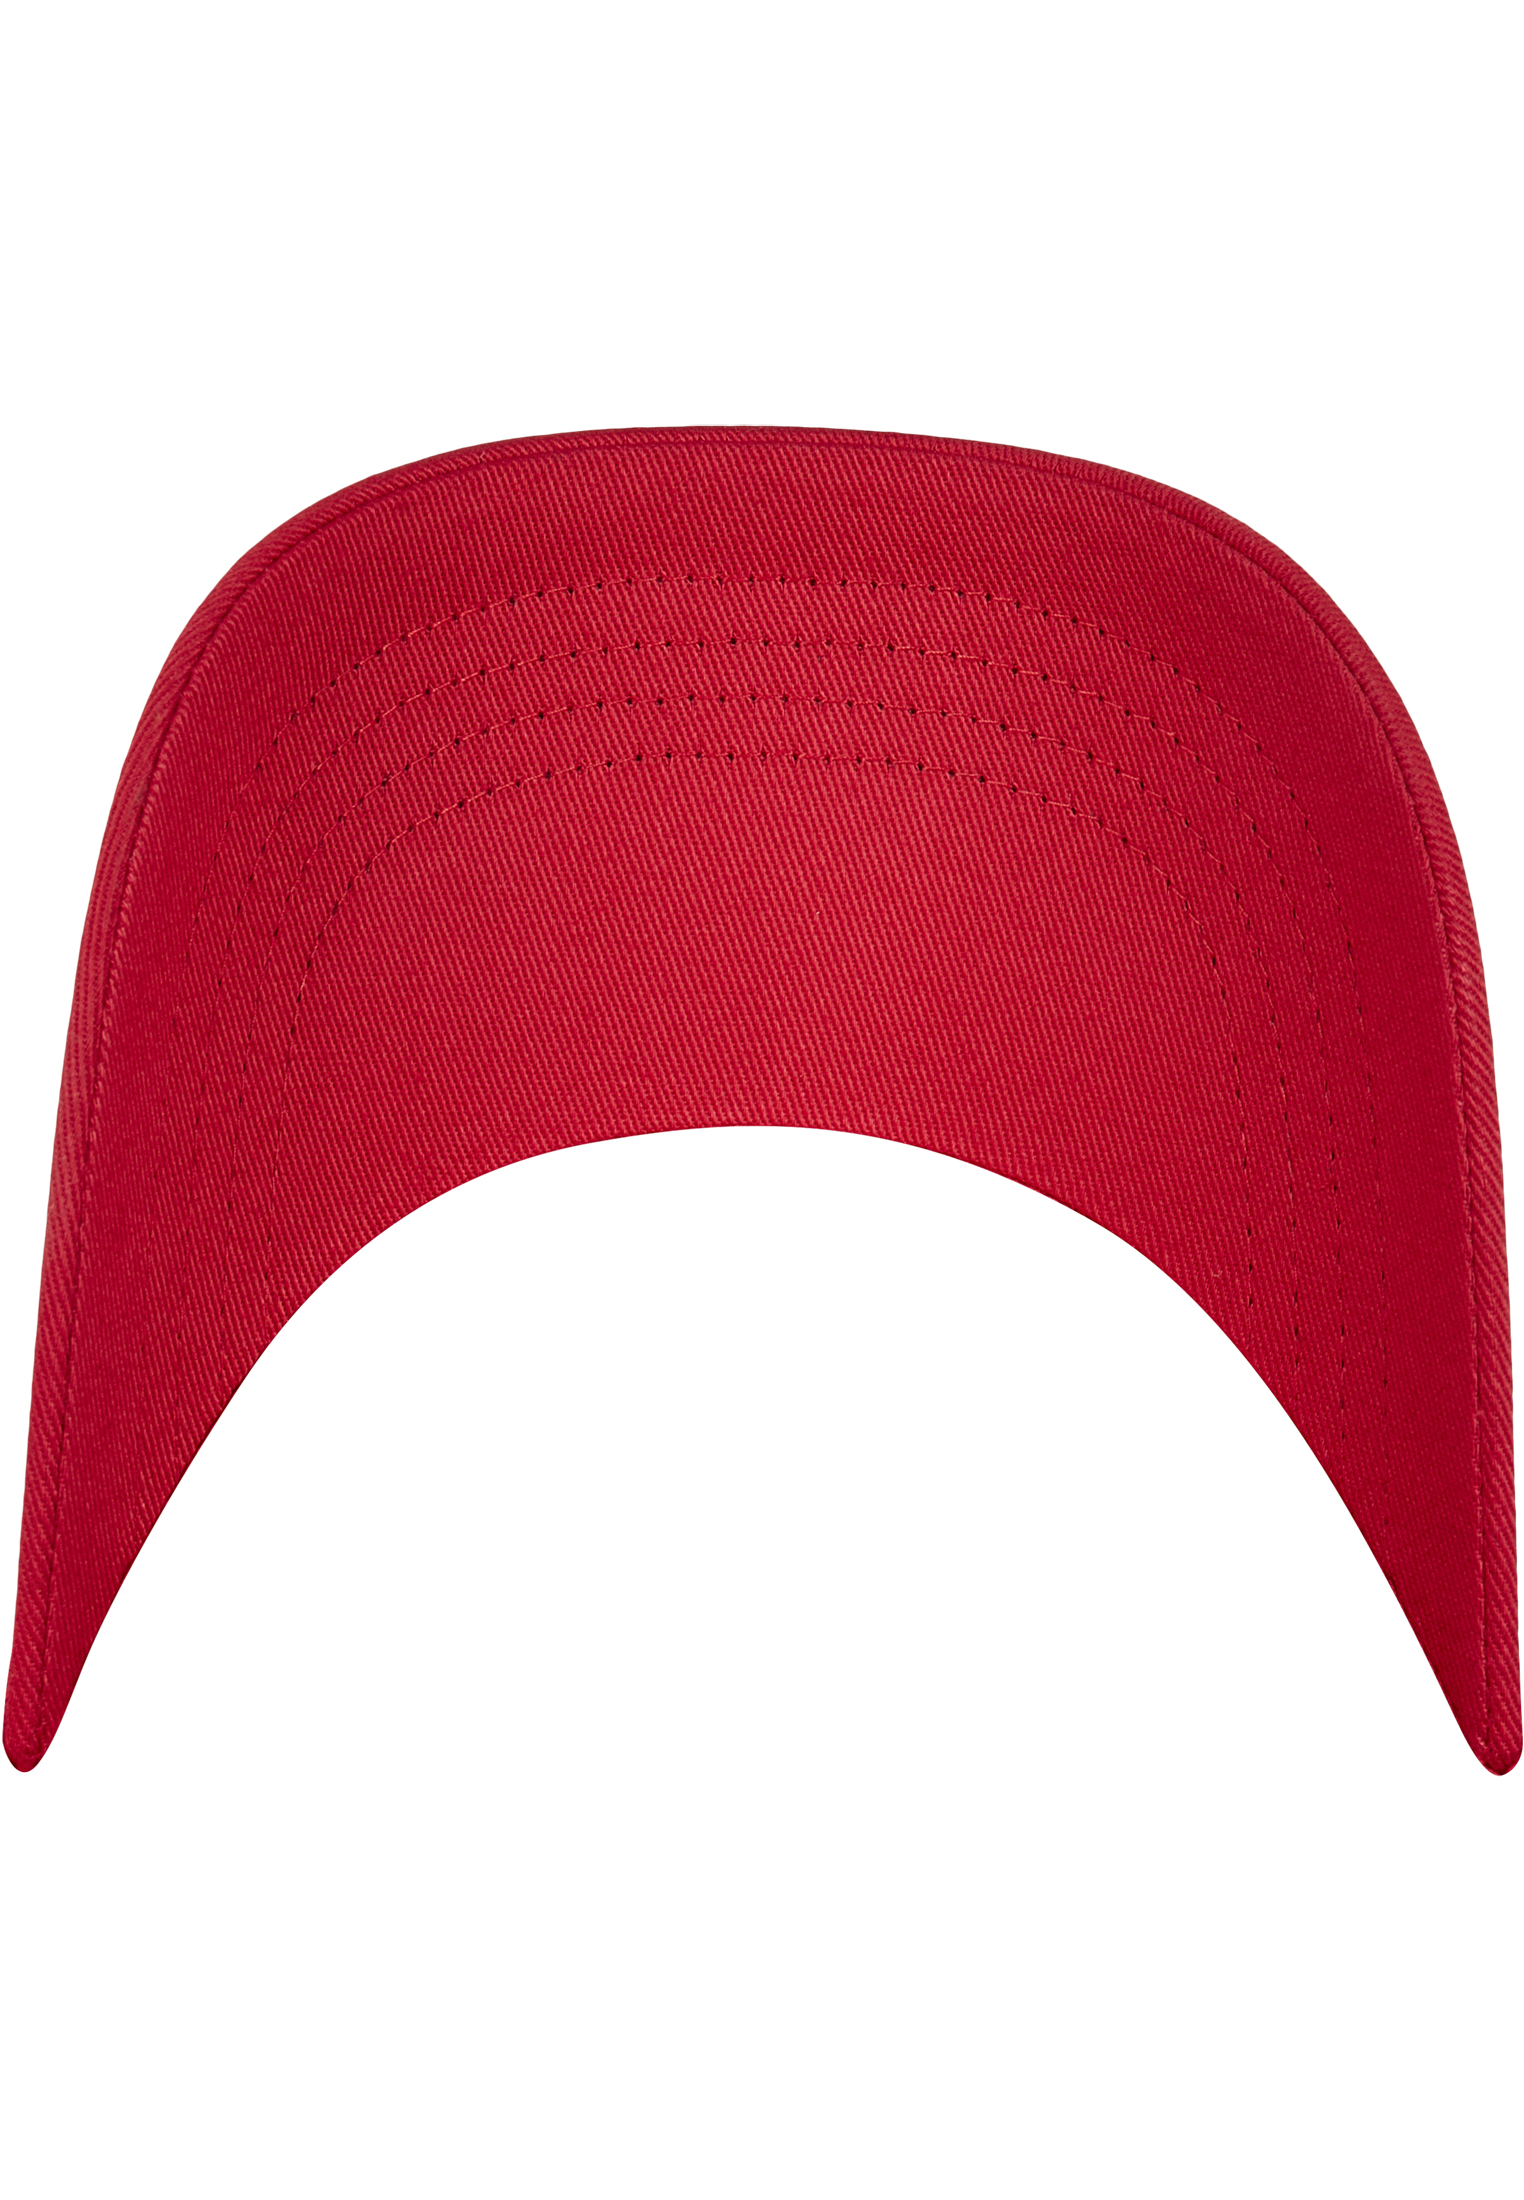 Nachhaltig Low Profile Organic Cotton Cap in Farbe red